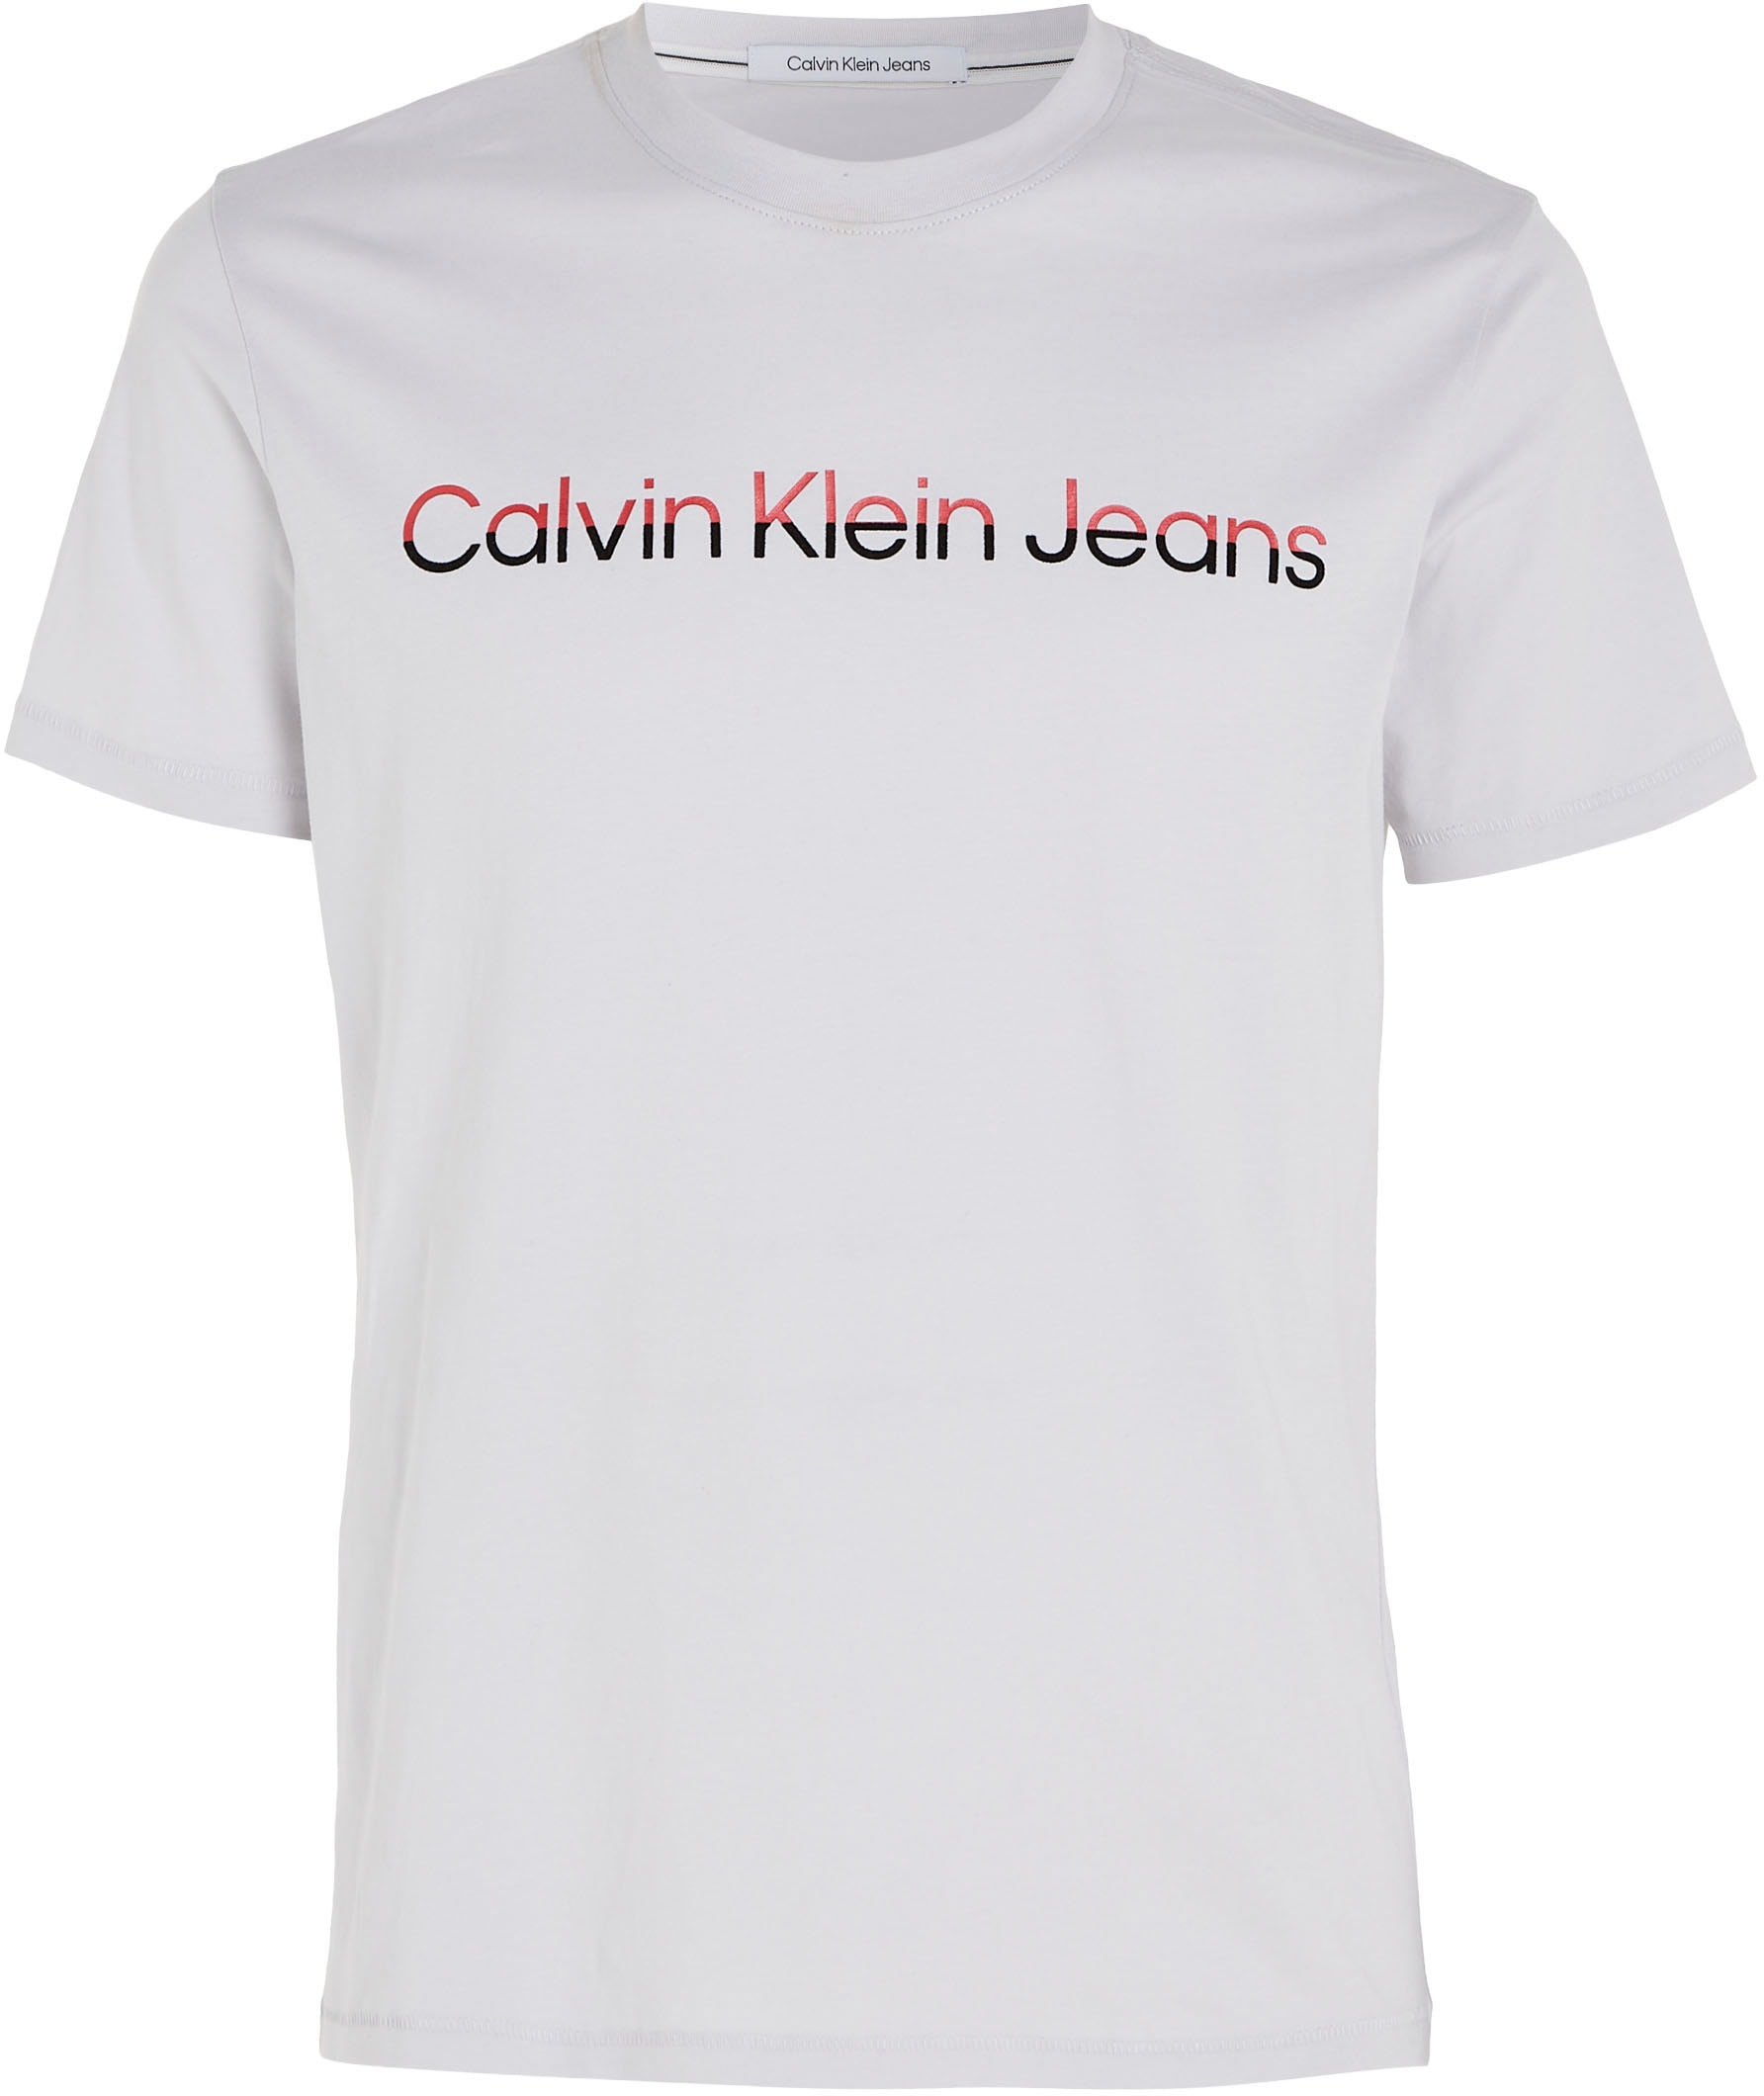  Calvin Klein Men's Short Sleeve Crew Neck Cotton Monogram Logo  T-Shirt, Black Taupe, Medium : Clothing, Shoes & Jewelry